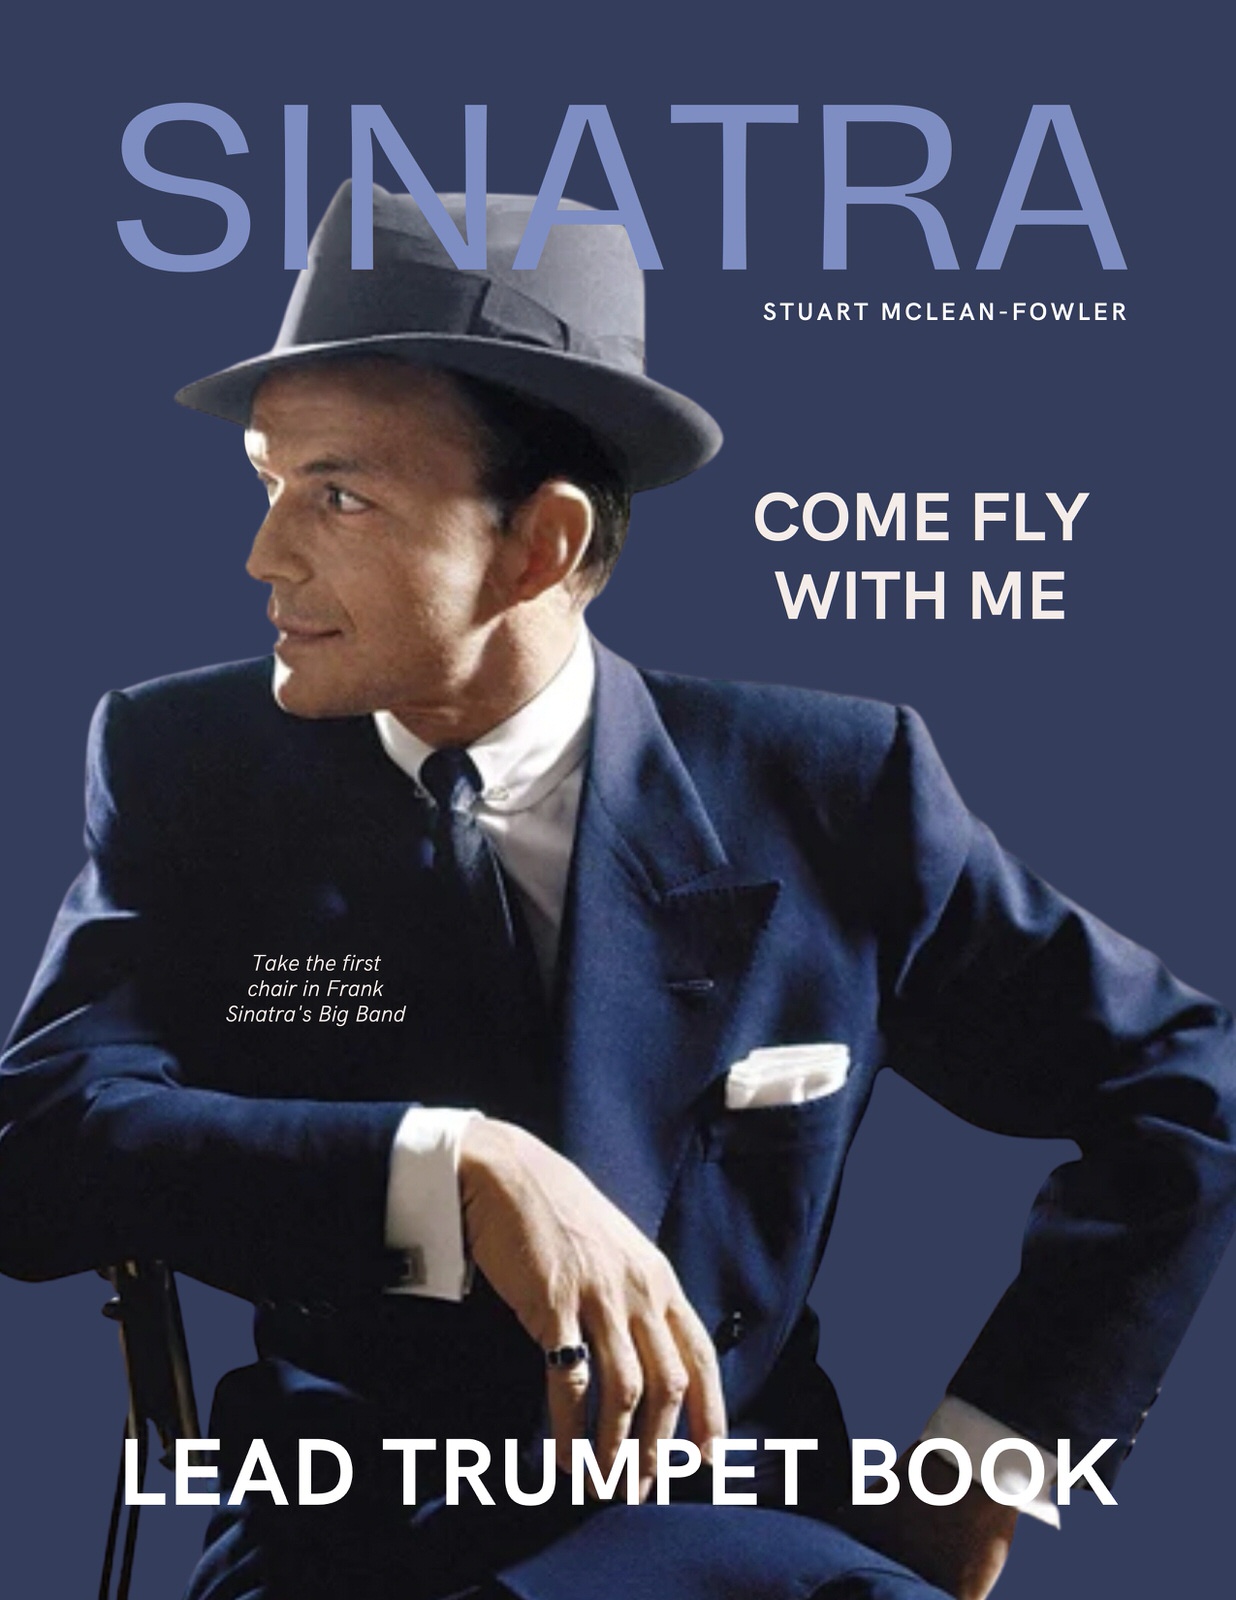 Sinatra's 